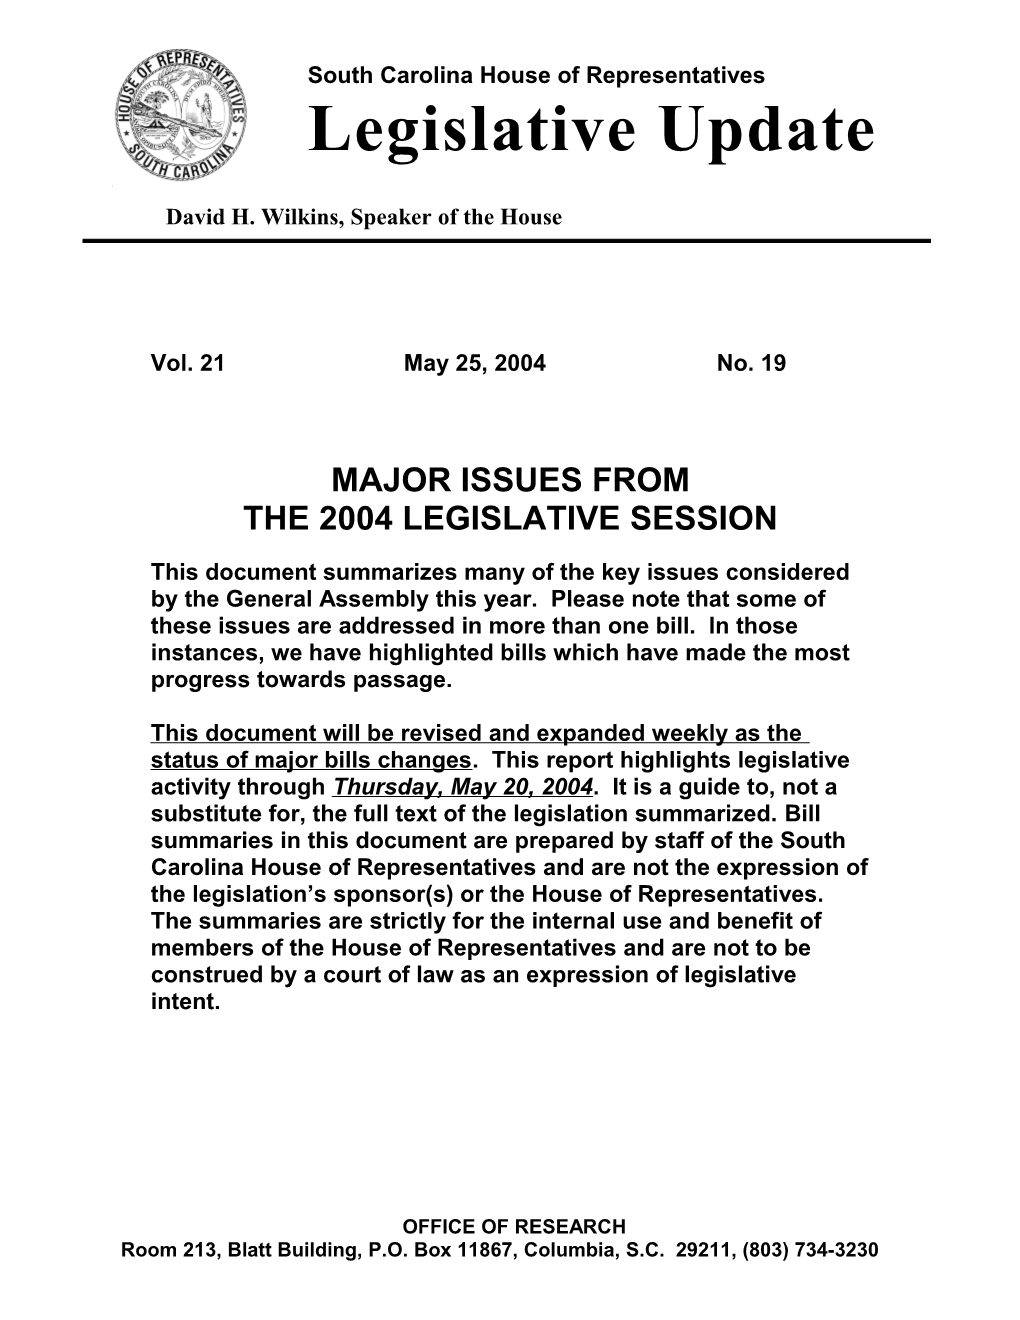 Legislative Update - Vol. 21 No. 19 May 25, 2004 - South Carolina Legislature Online